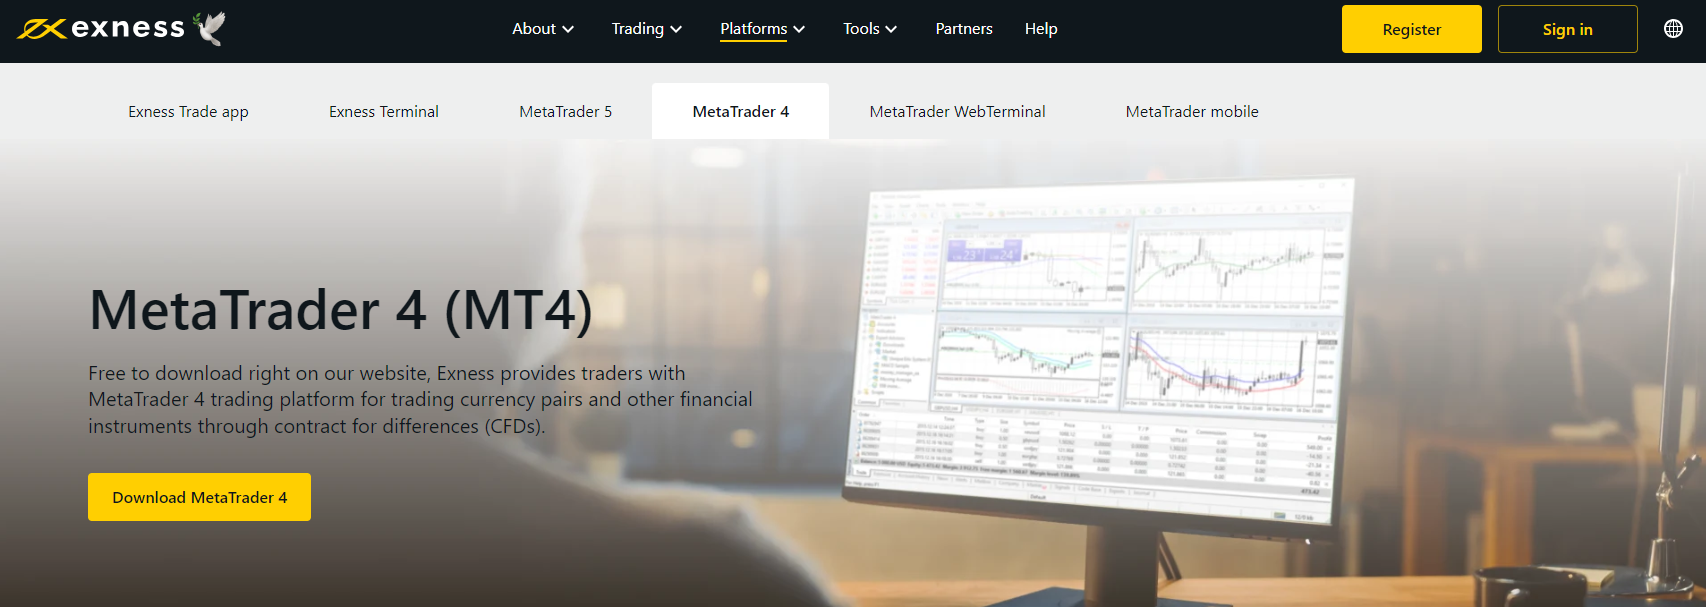 MetaTrader 4 - Plataforma de Trading na Exness